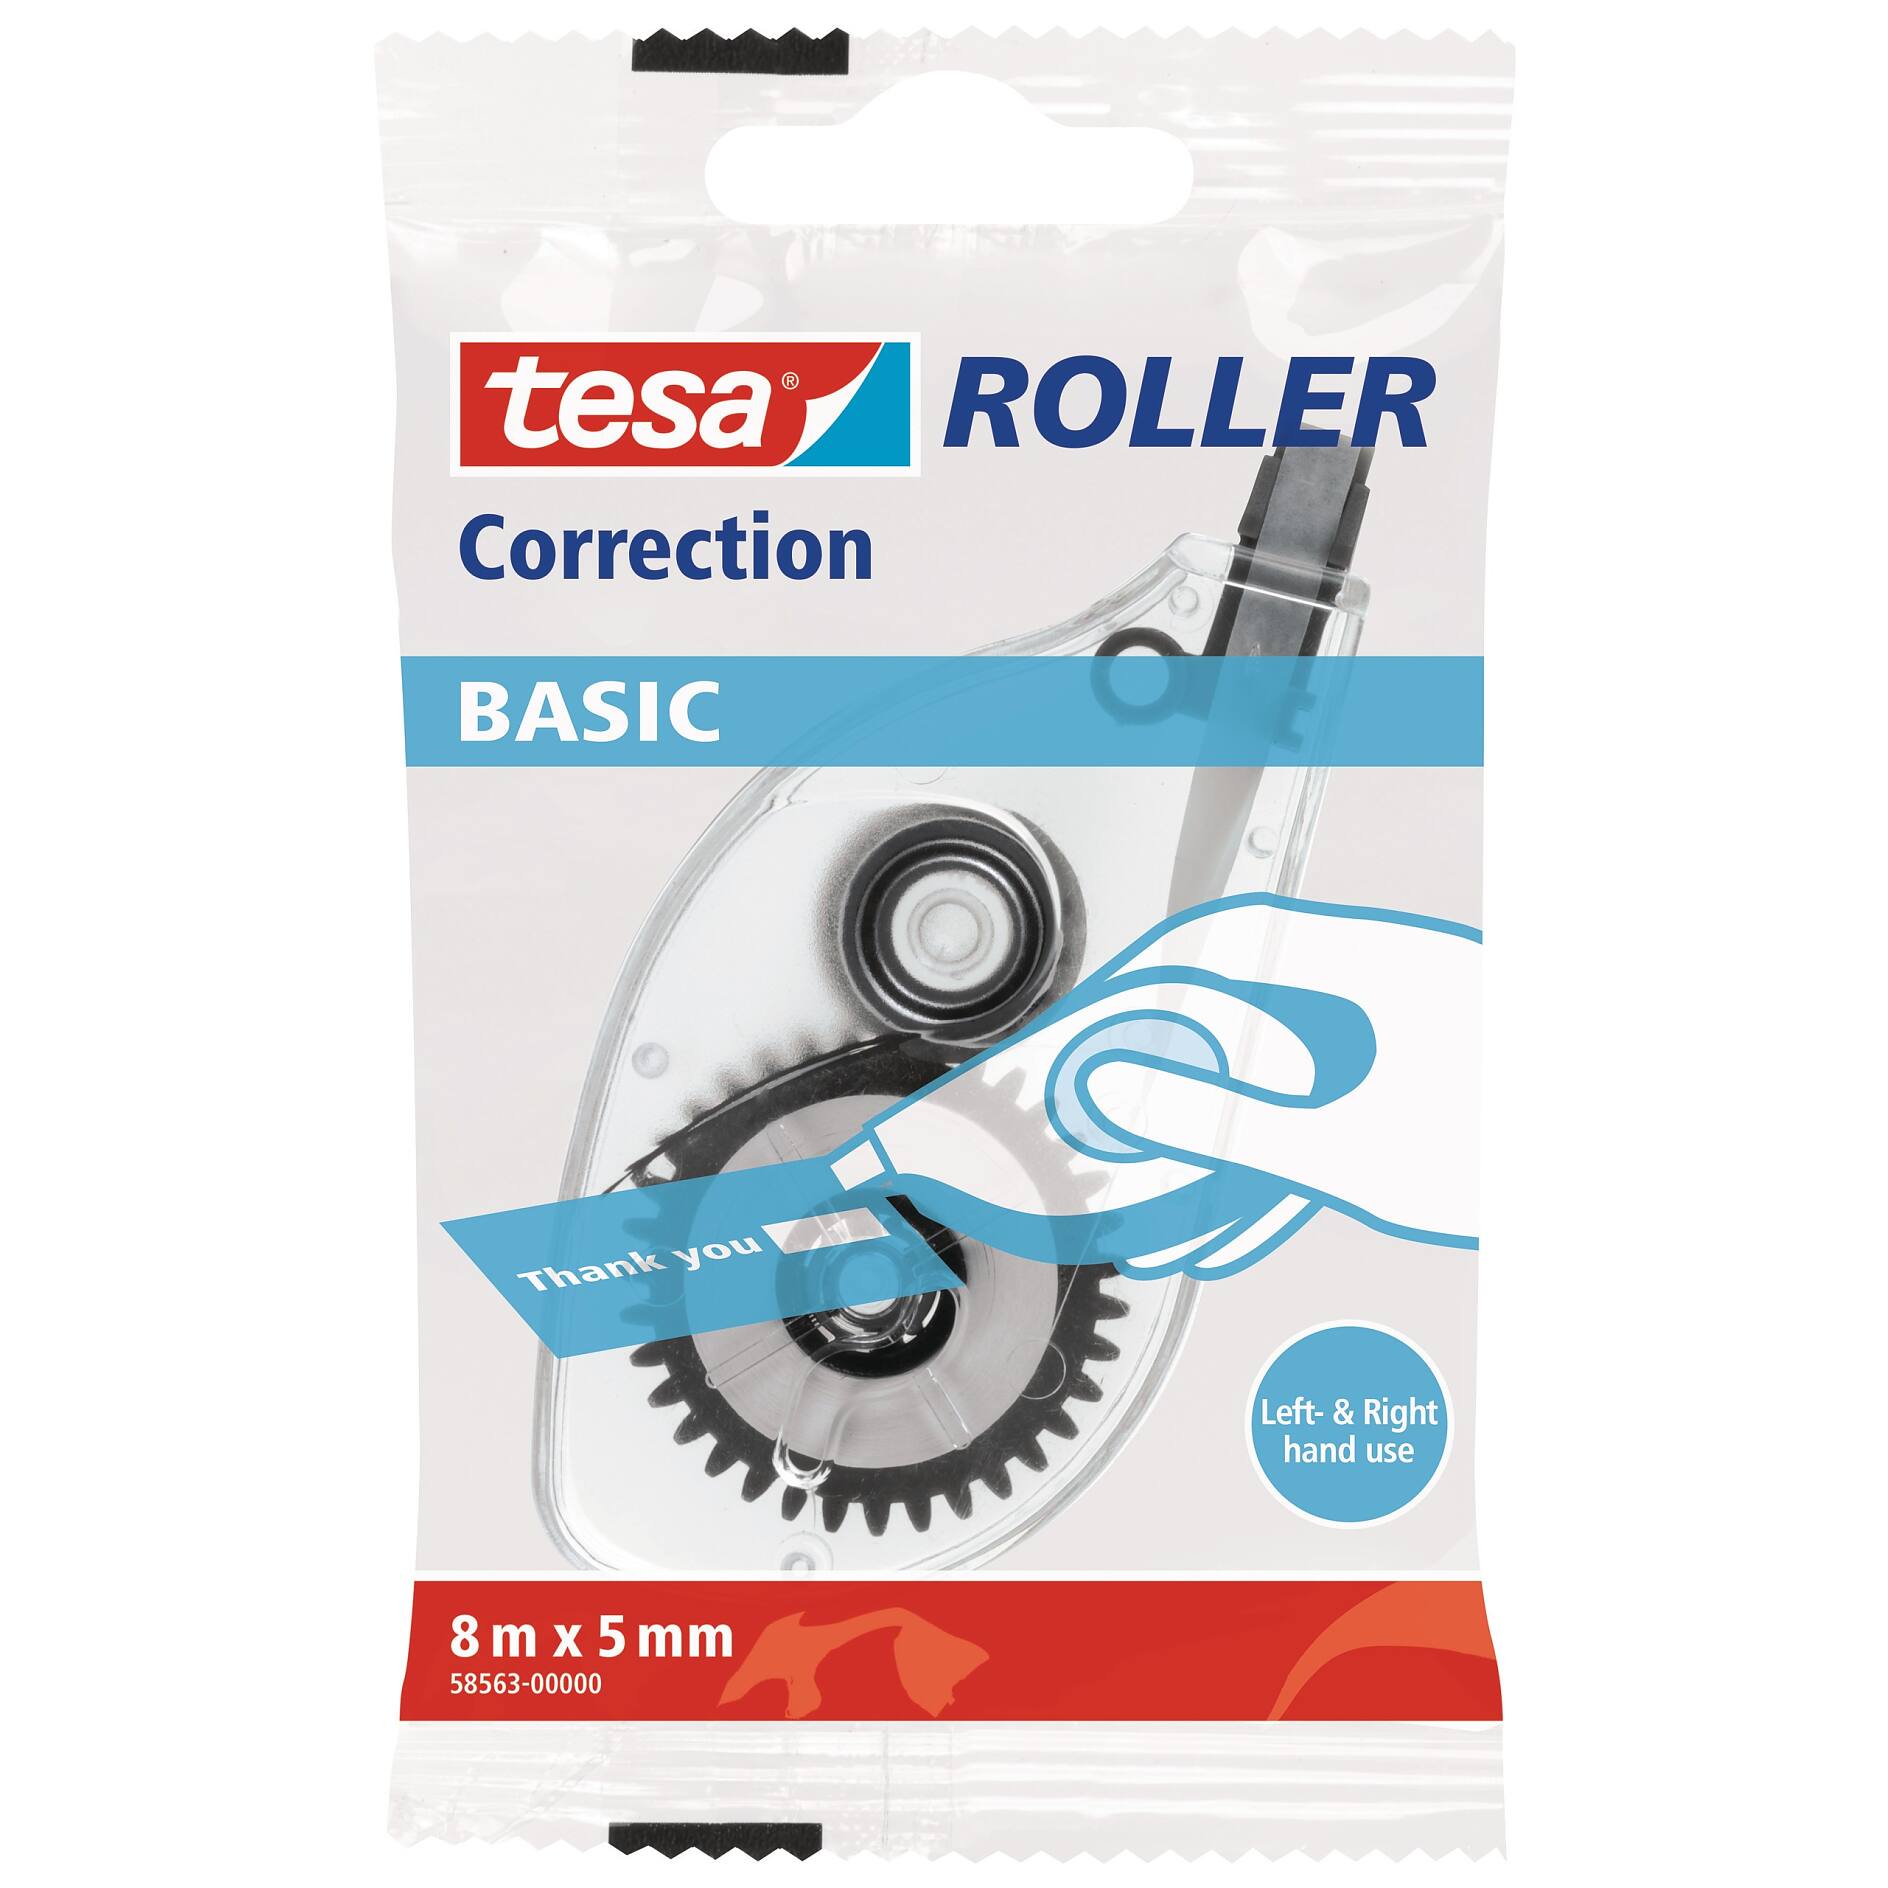 Tesa® Roller Colle Permanente Ecologo® (l X L) 14 M X 8.4 Mm 1 Pc